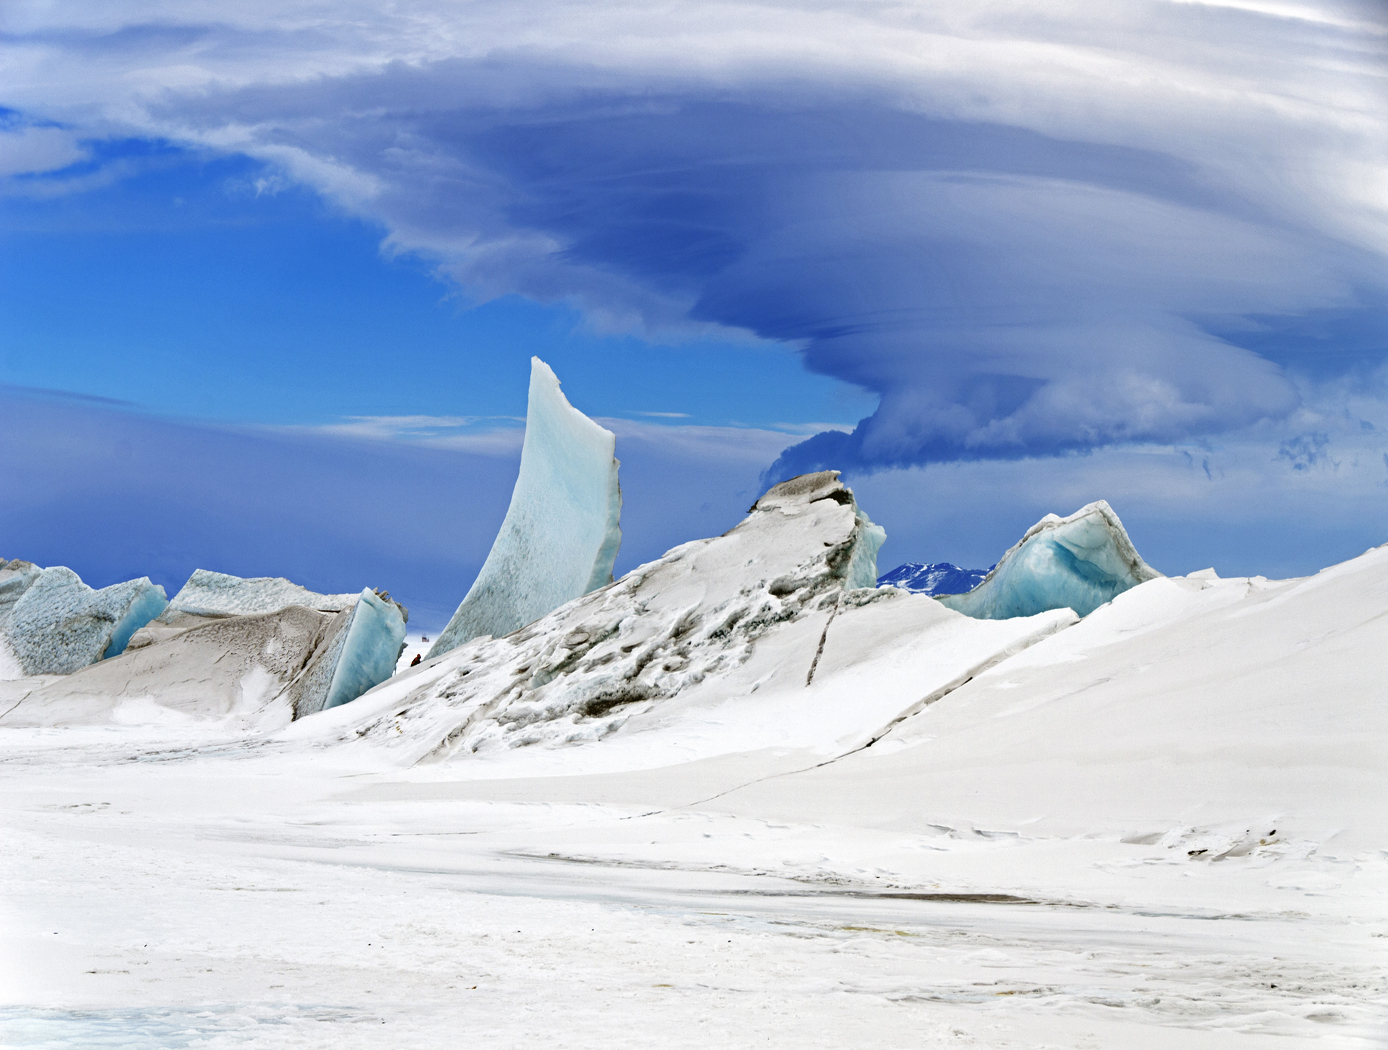 NASA short ice-surveying mission in Antarctica